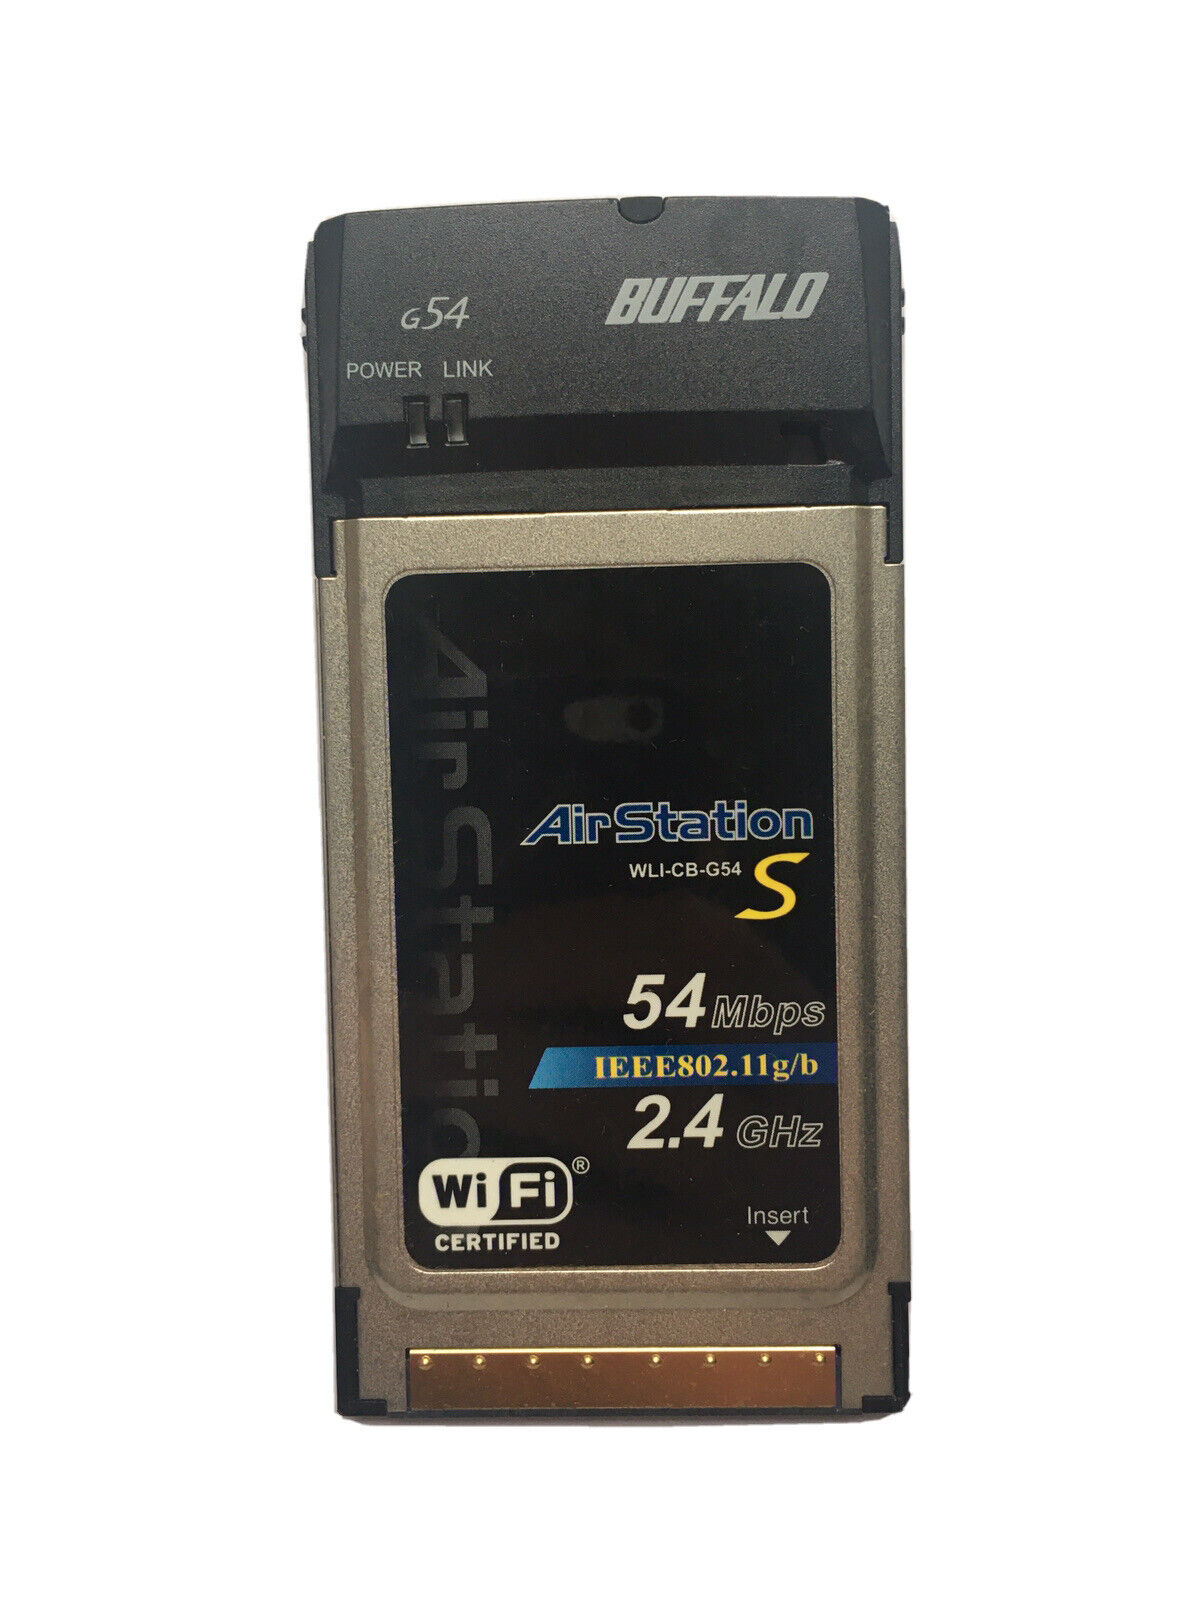 BUFFALO AIR STATION WLI-CB-G54 54Mbps 2.4GHz NOTEBOOK ADAPTER CARDBus